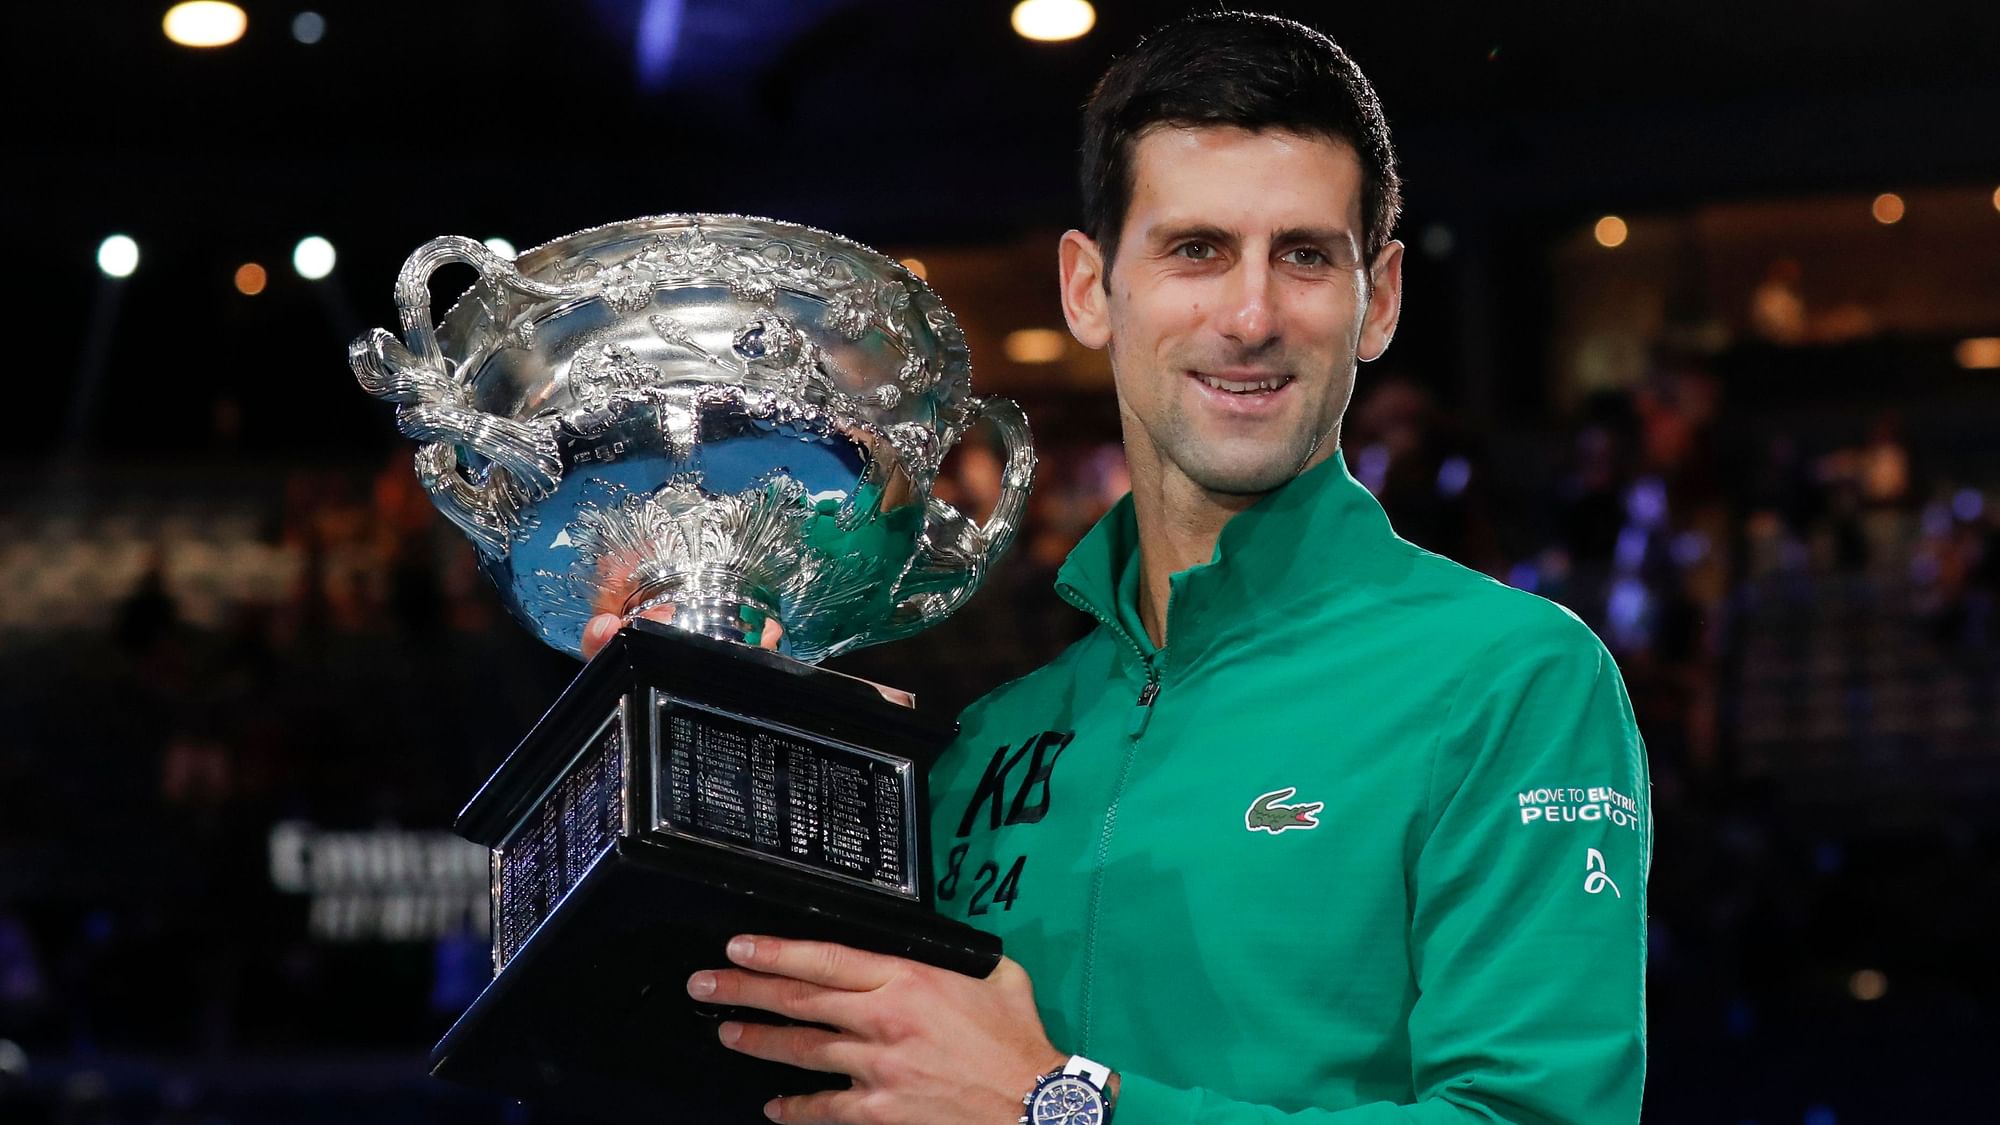 Australian Open 2020 Djokovic wins 8th title with fiveset win over Thiem